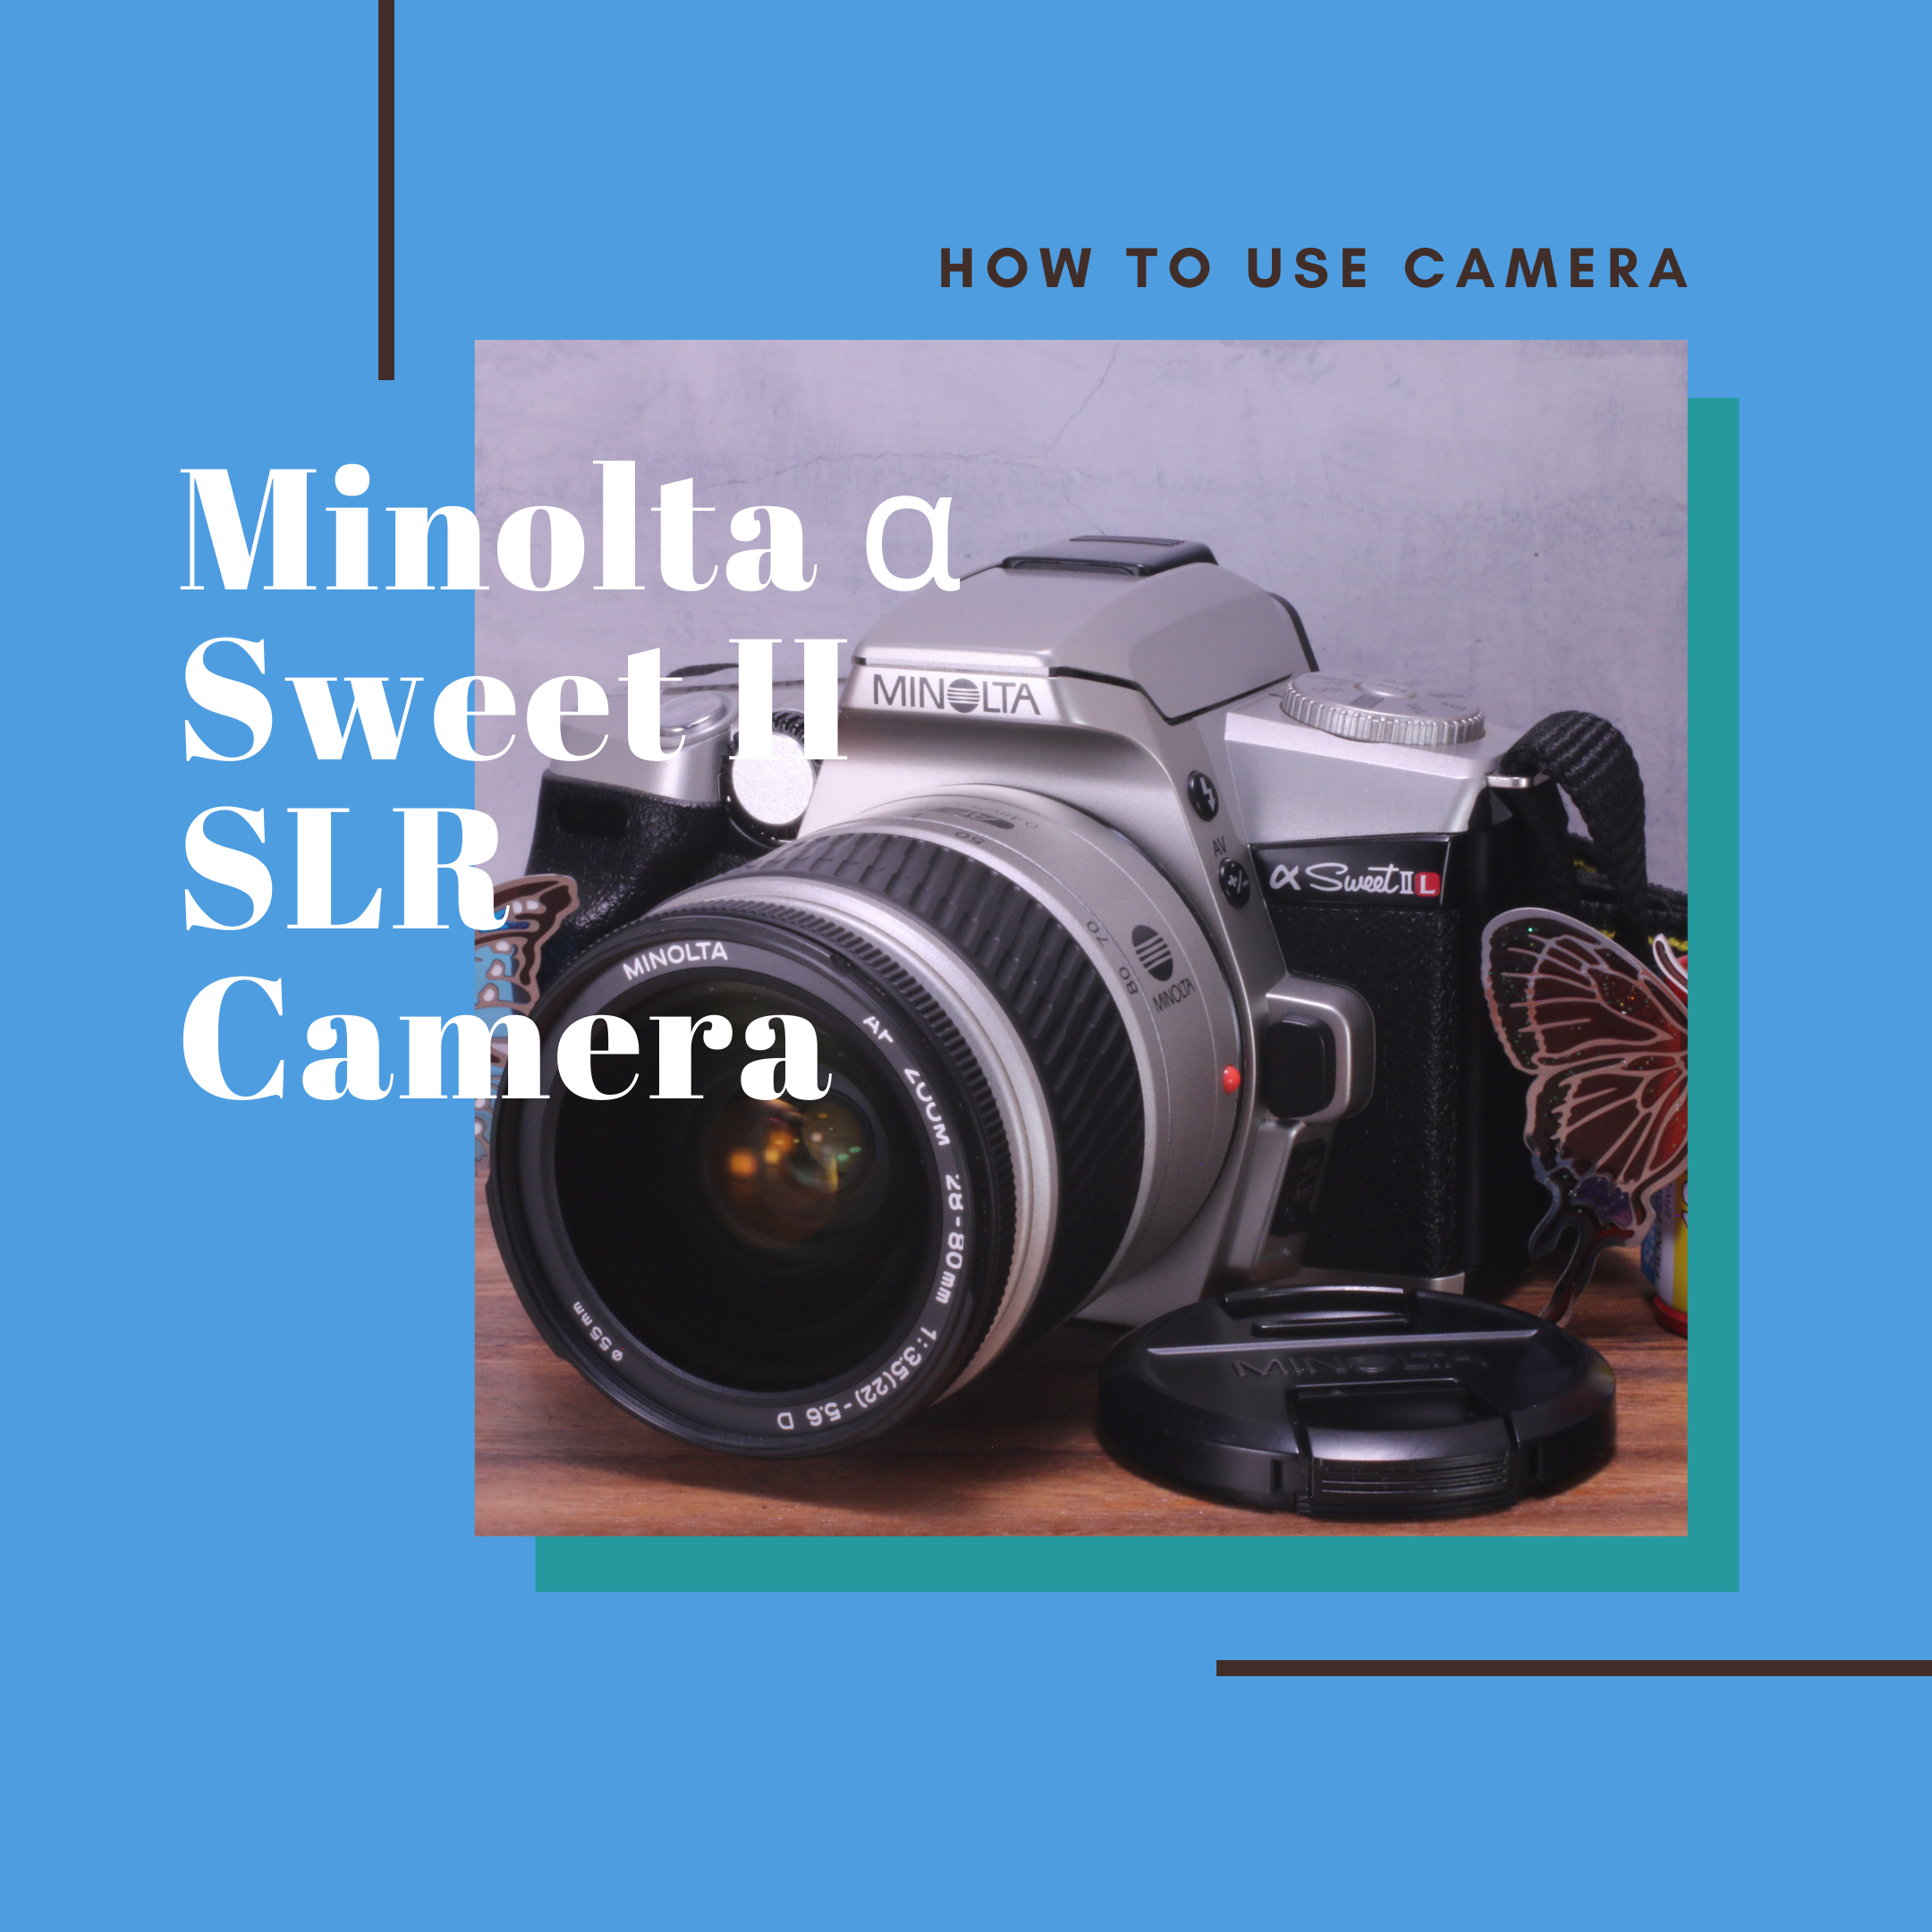 Minolta α Sweet II 一眼レフフィルムカメラ の使い方 | Totte Me Camera